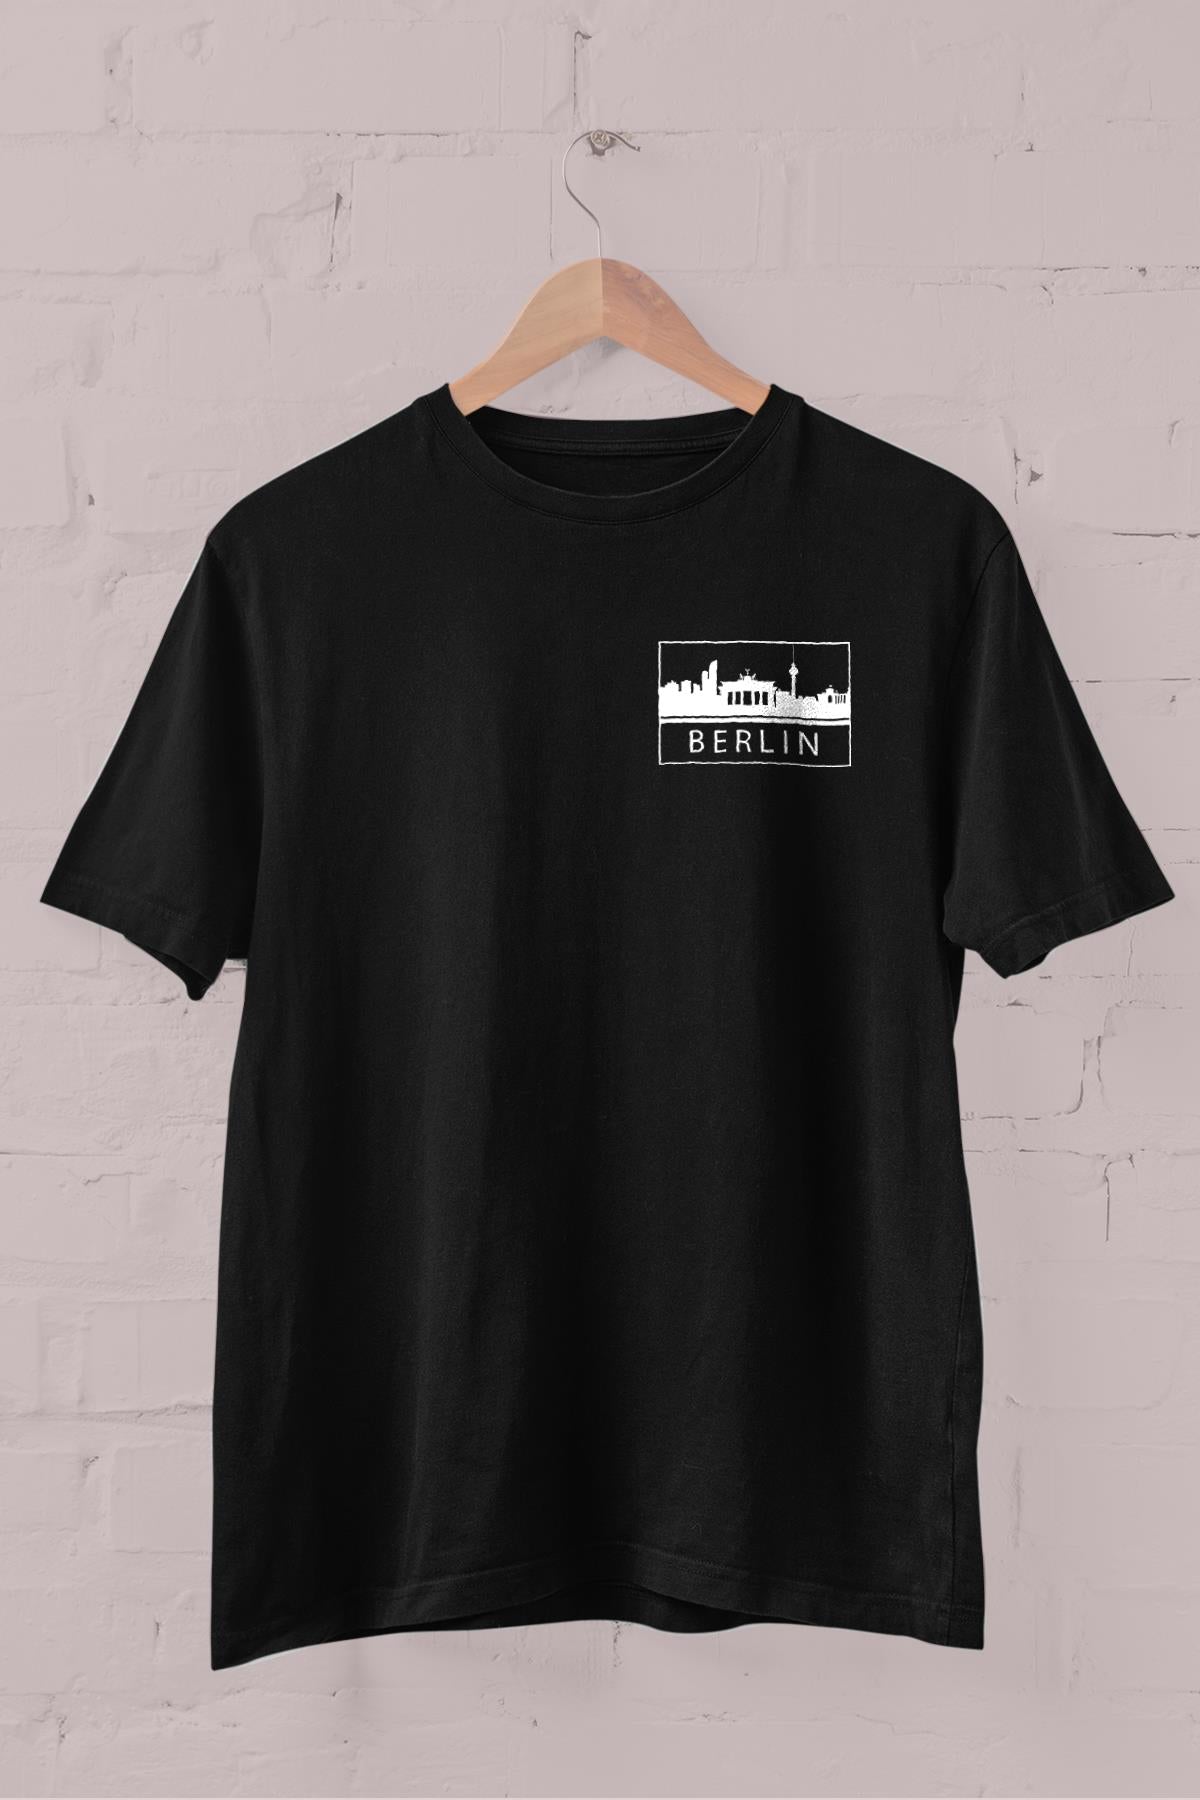 Berlin silhouette printed Crew Neck men's t -shirt